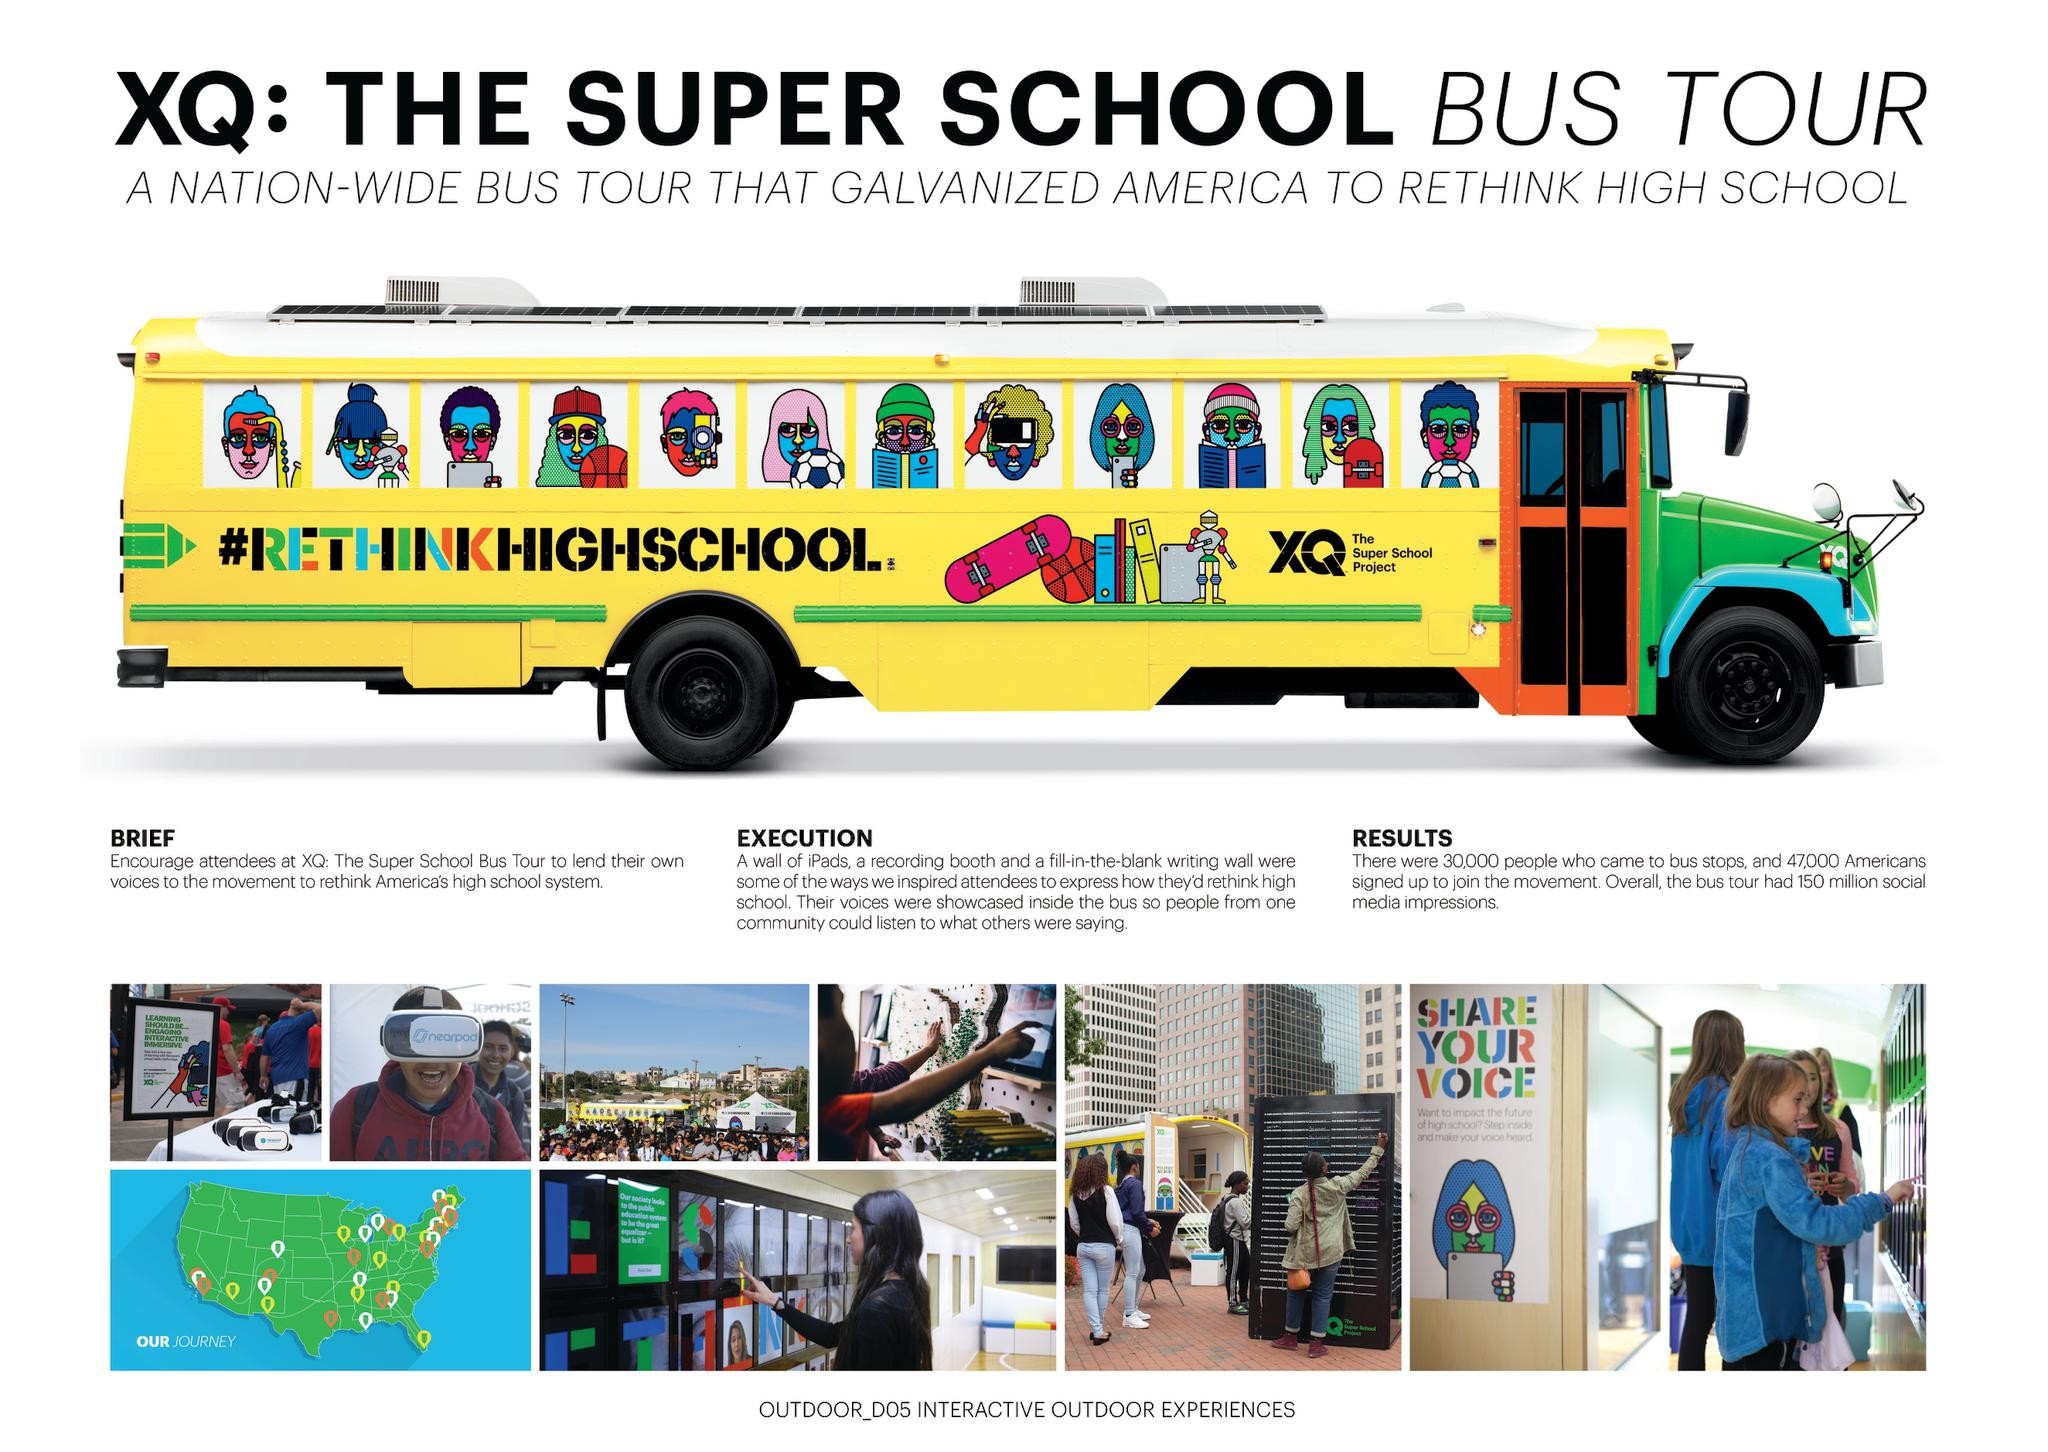 XQ: The Super School Bus Tour